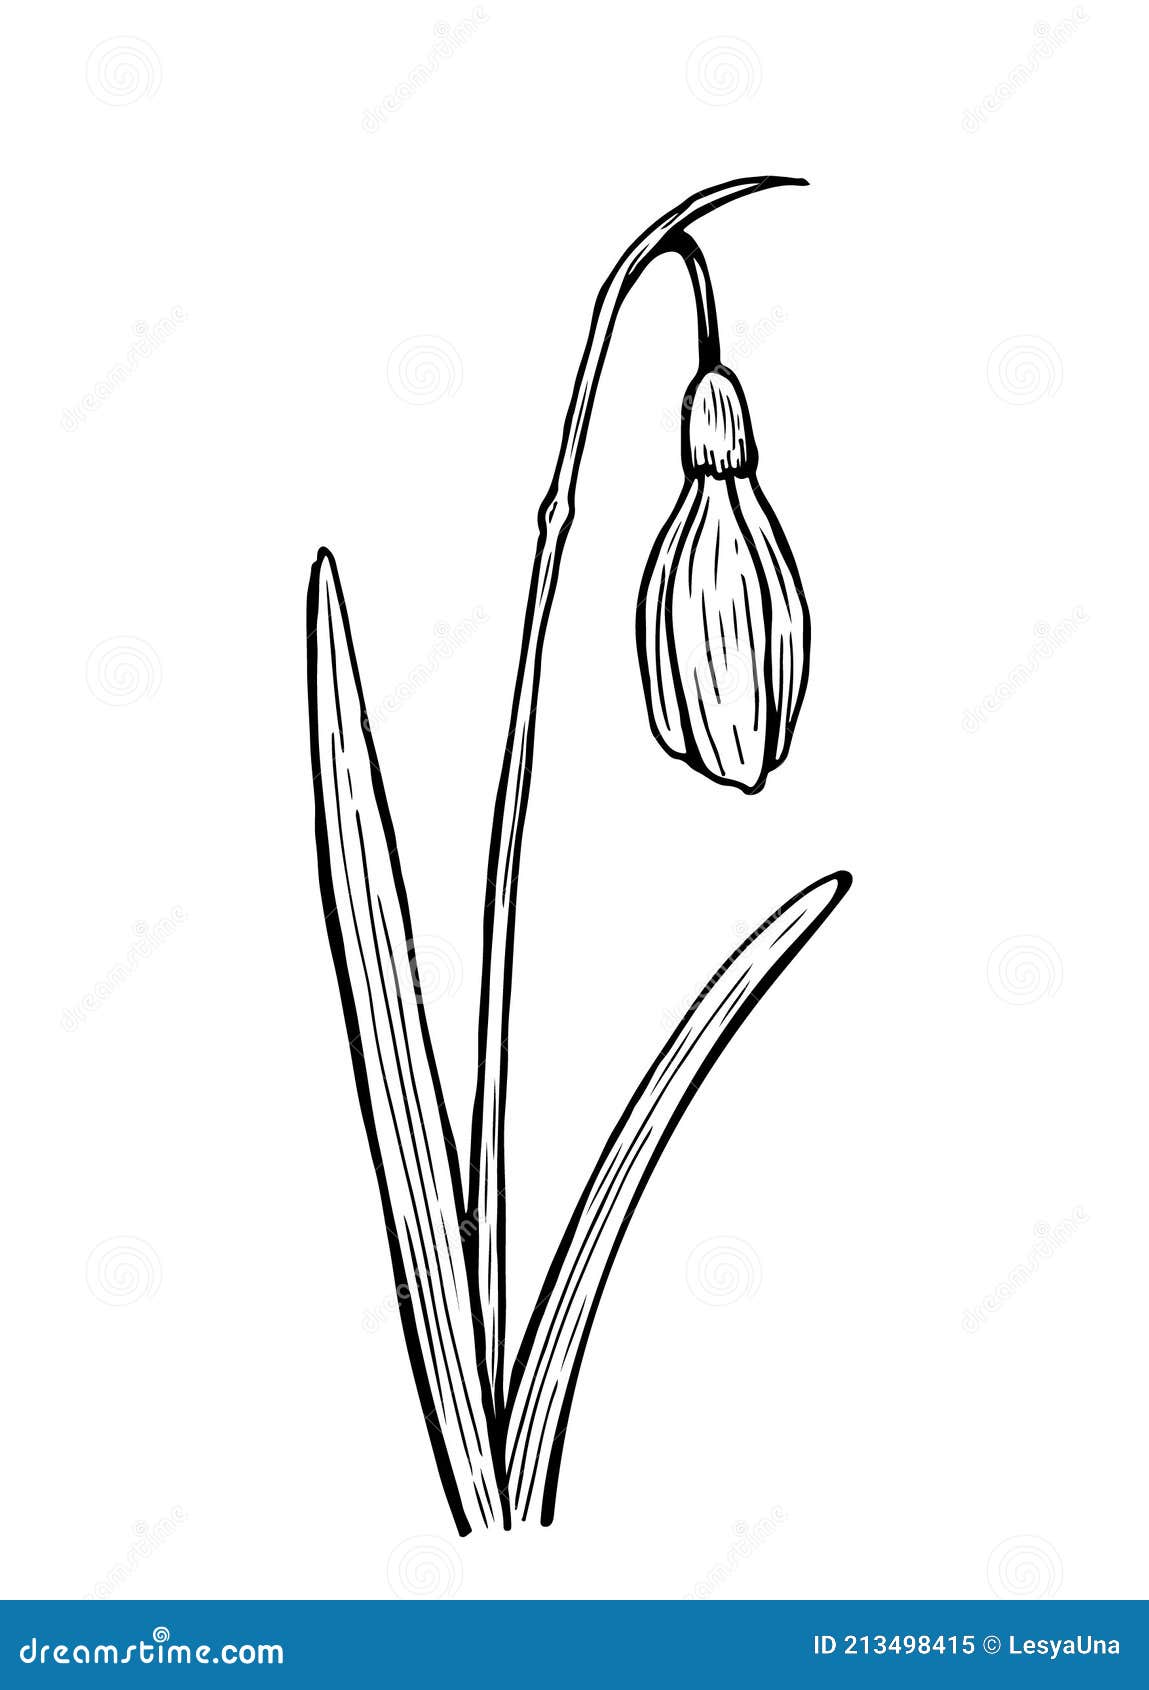 Tulip and Snowdrop flower graphic sketch  Stock Illustration 57957483   PIXTA